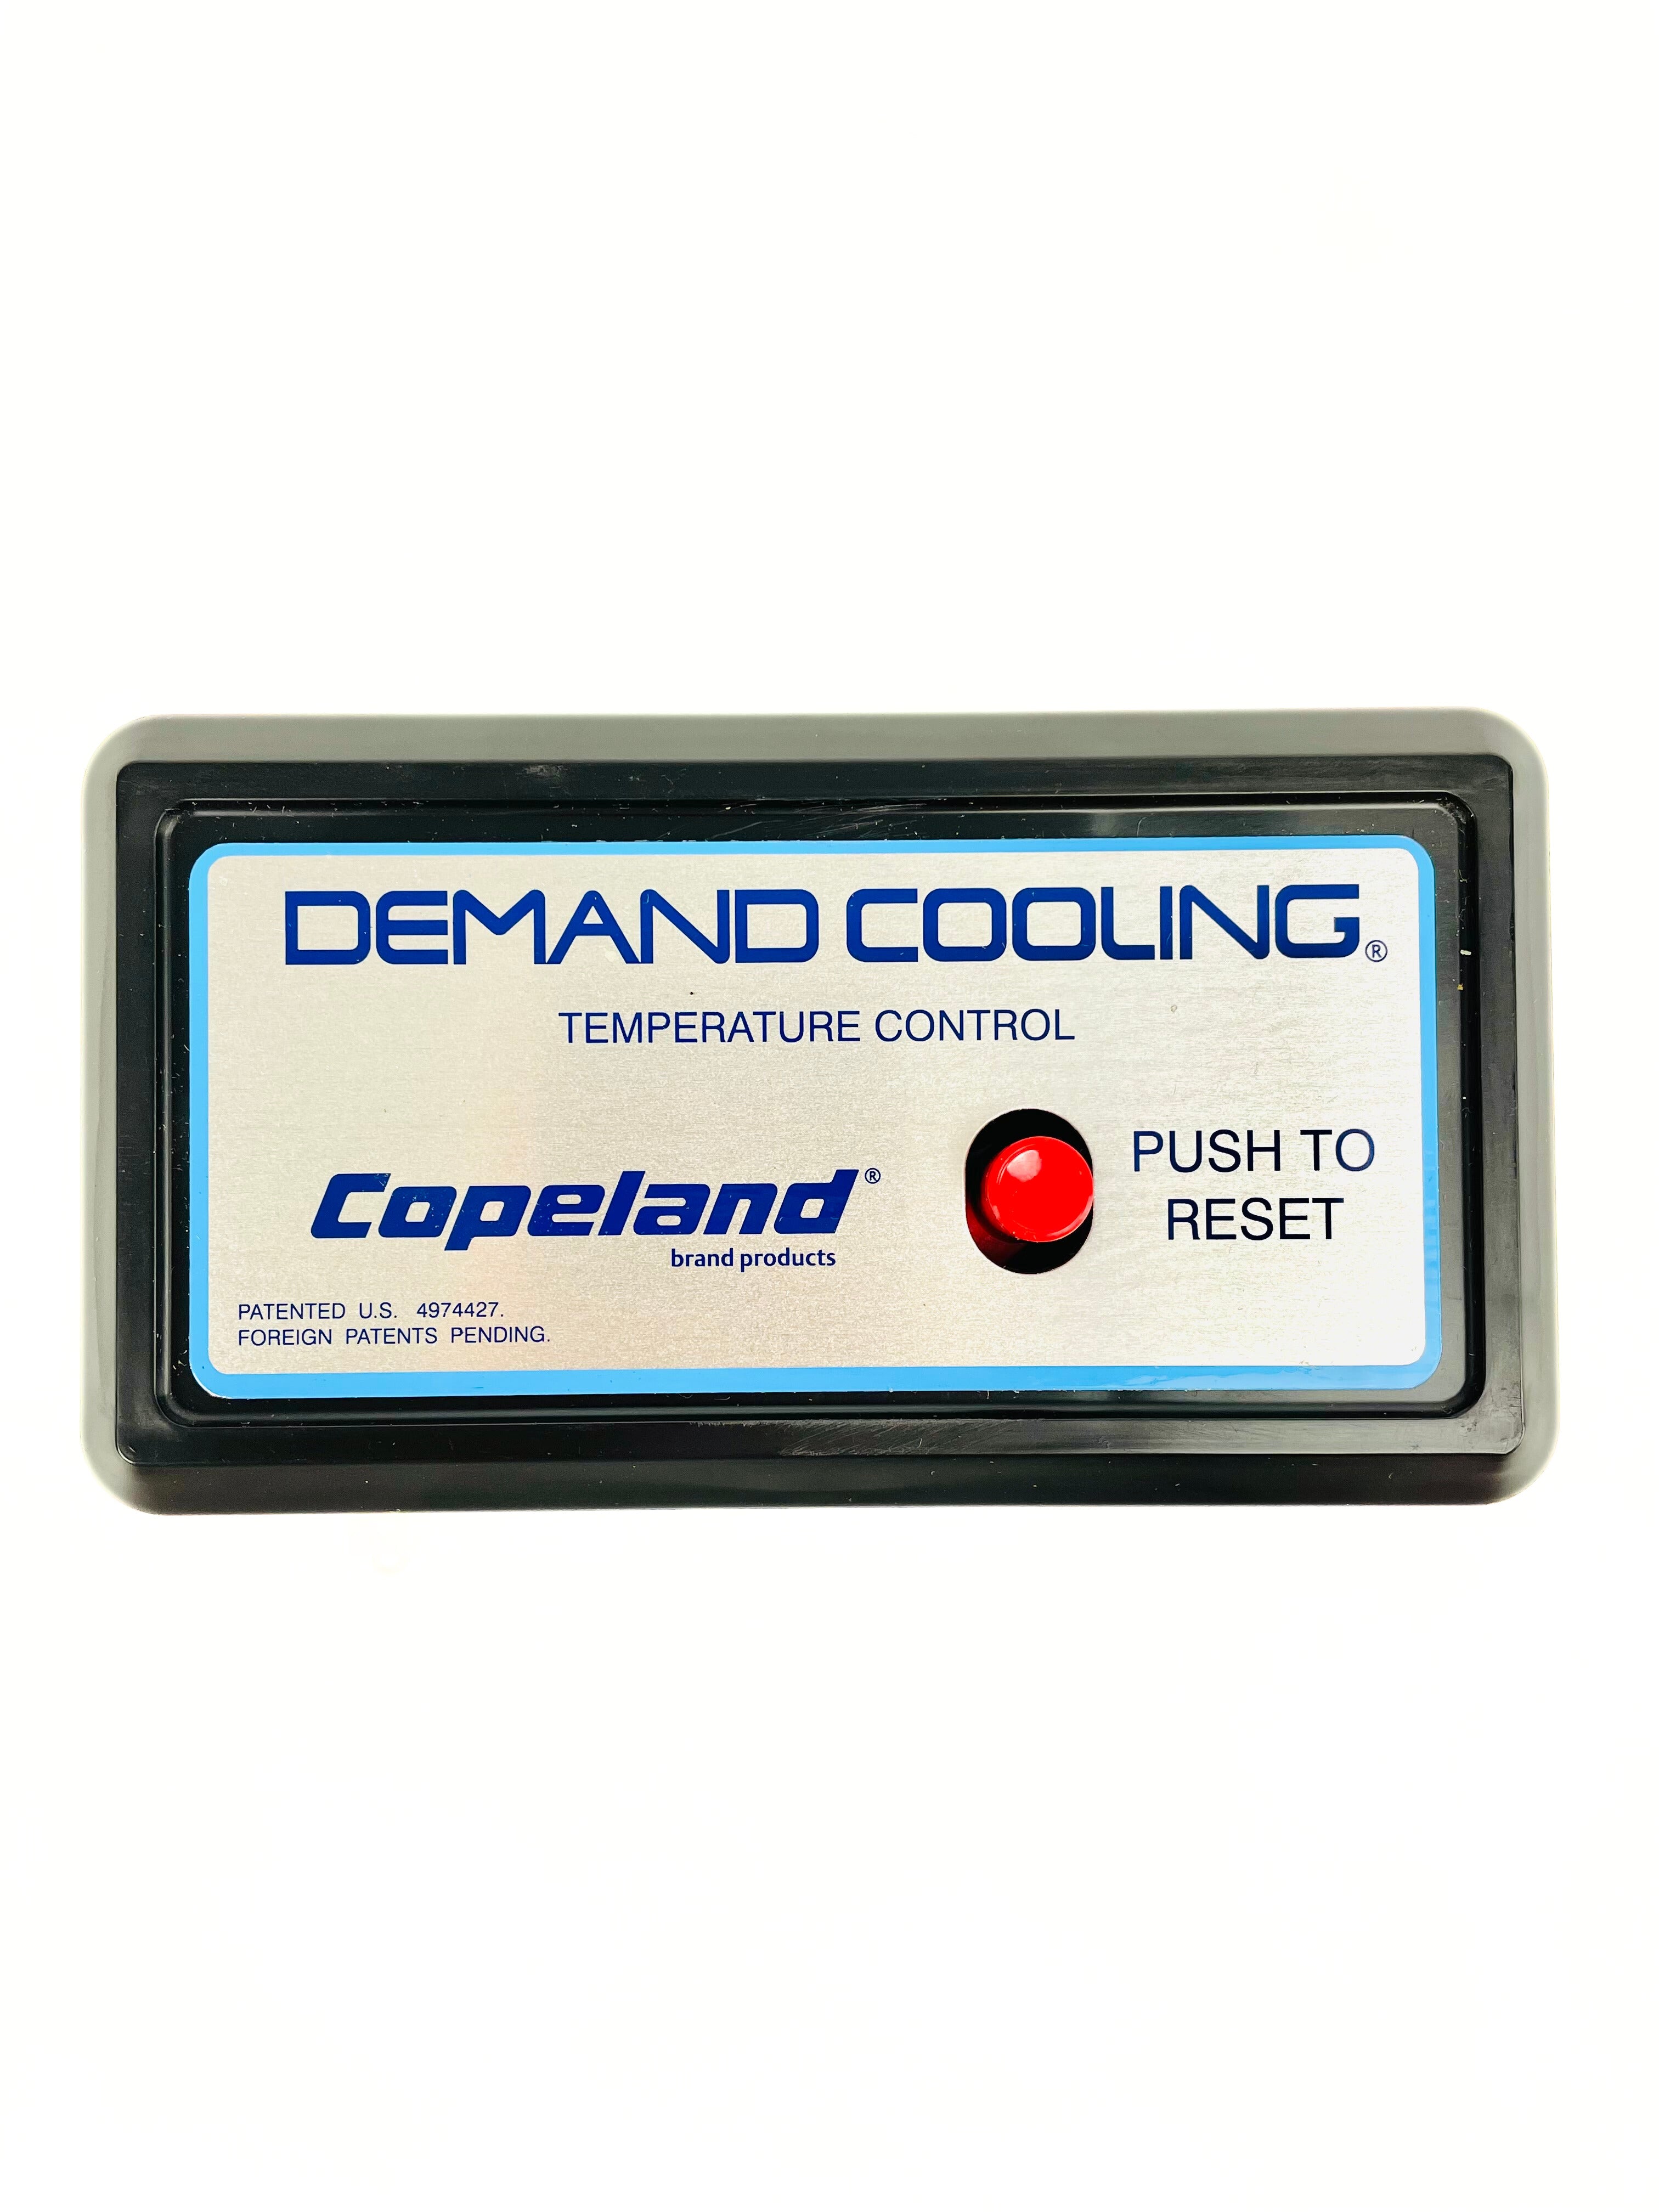 Emerson Copeland 4D Demand Cooling Kit 998-2000-24